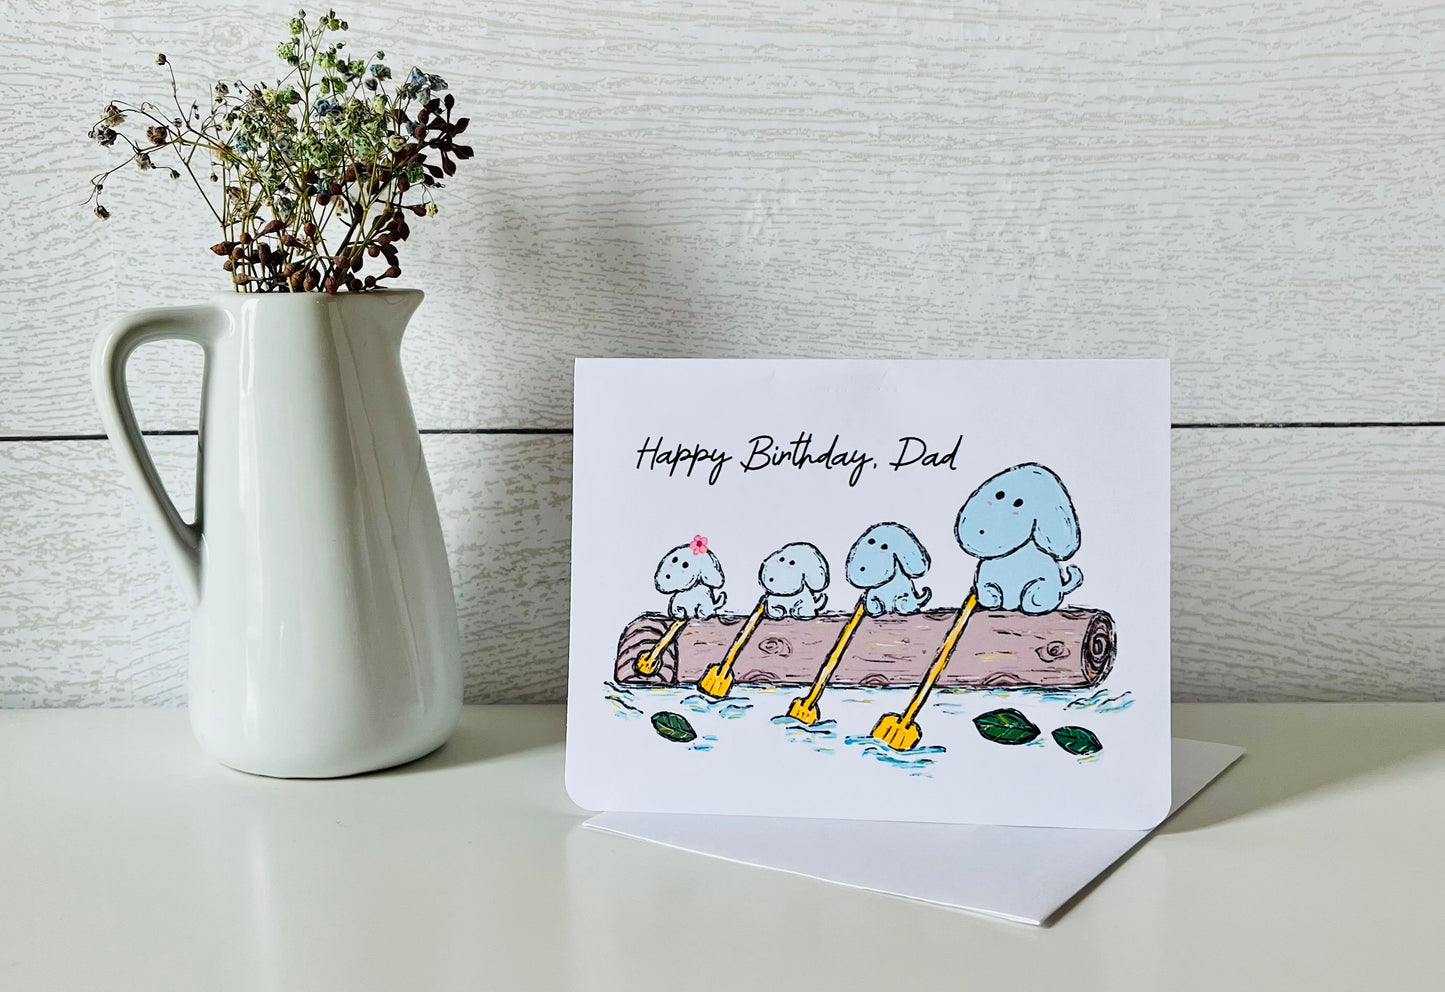 Assorted Handmade Delightful Birthday Greeting Cards